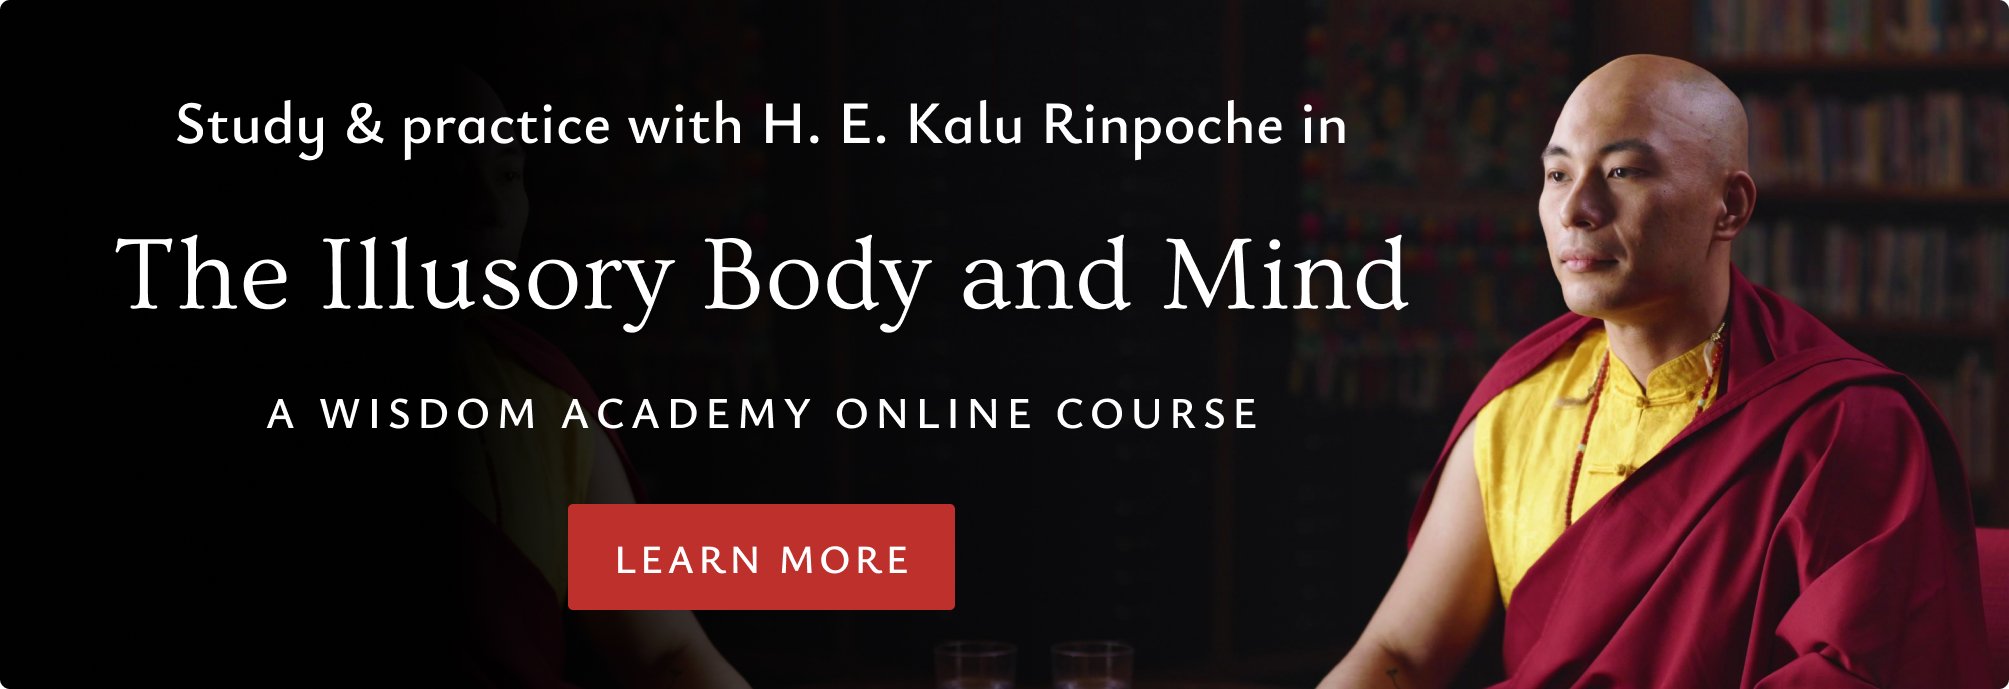 Kalu Rinpoche teachings course